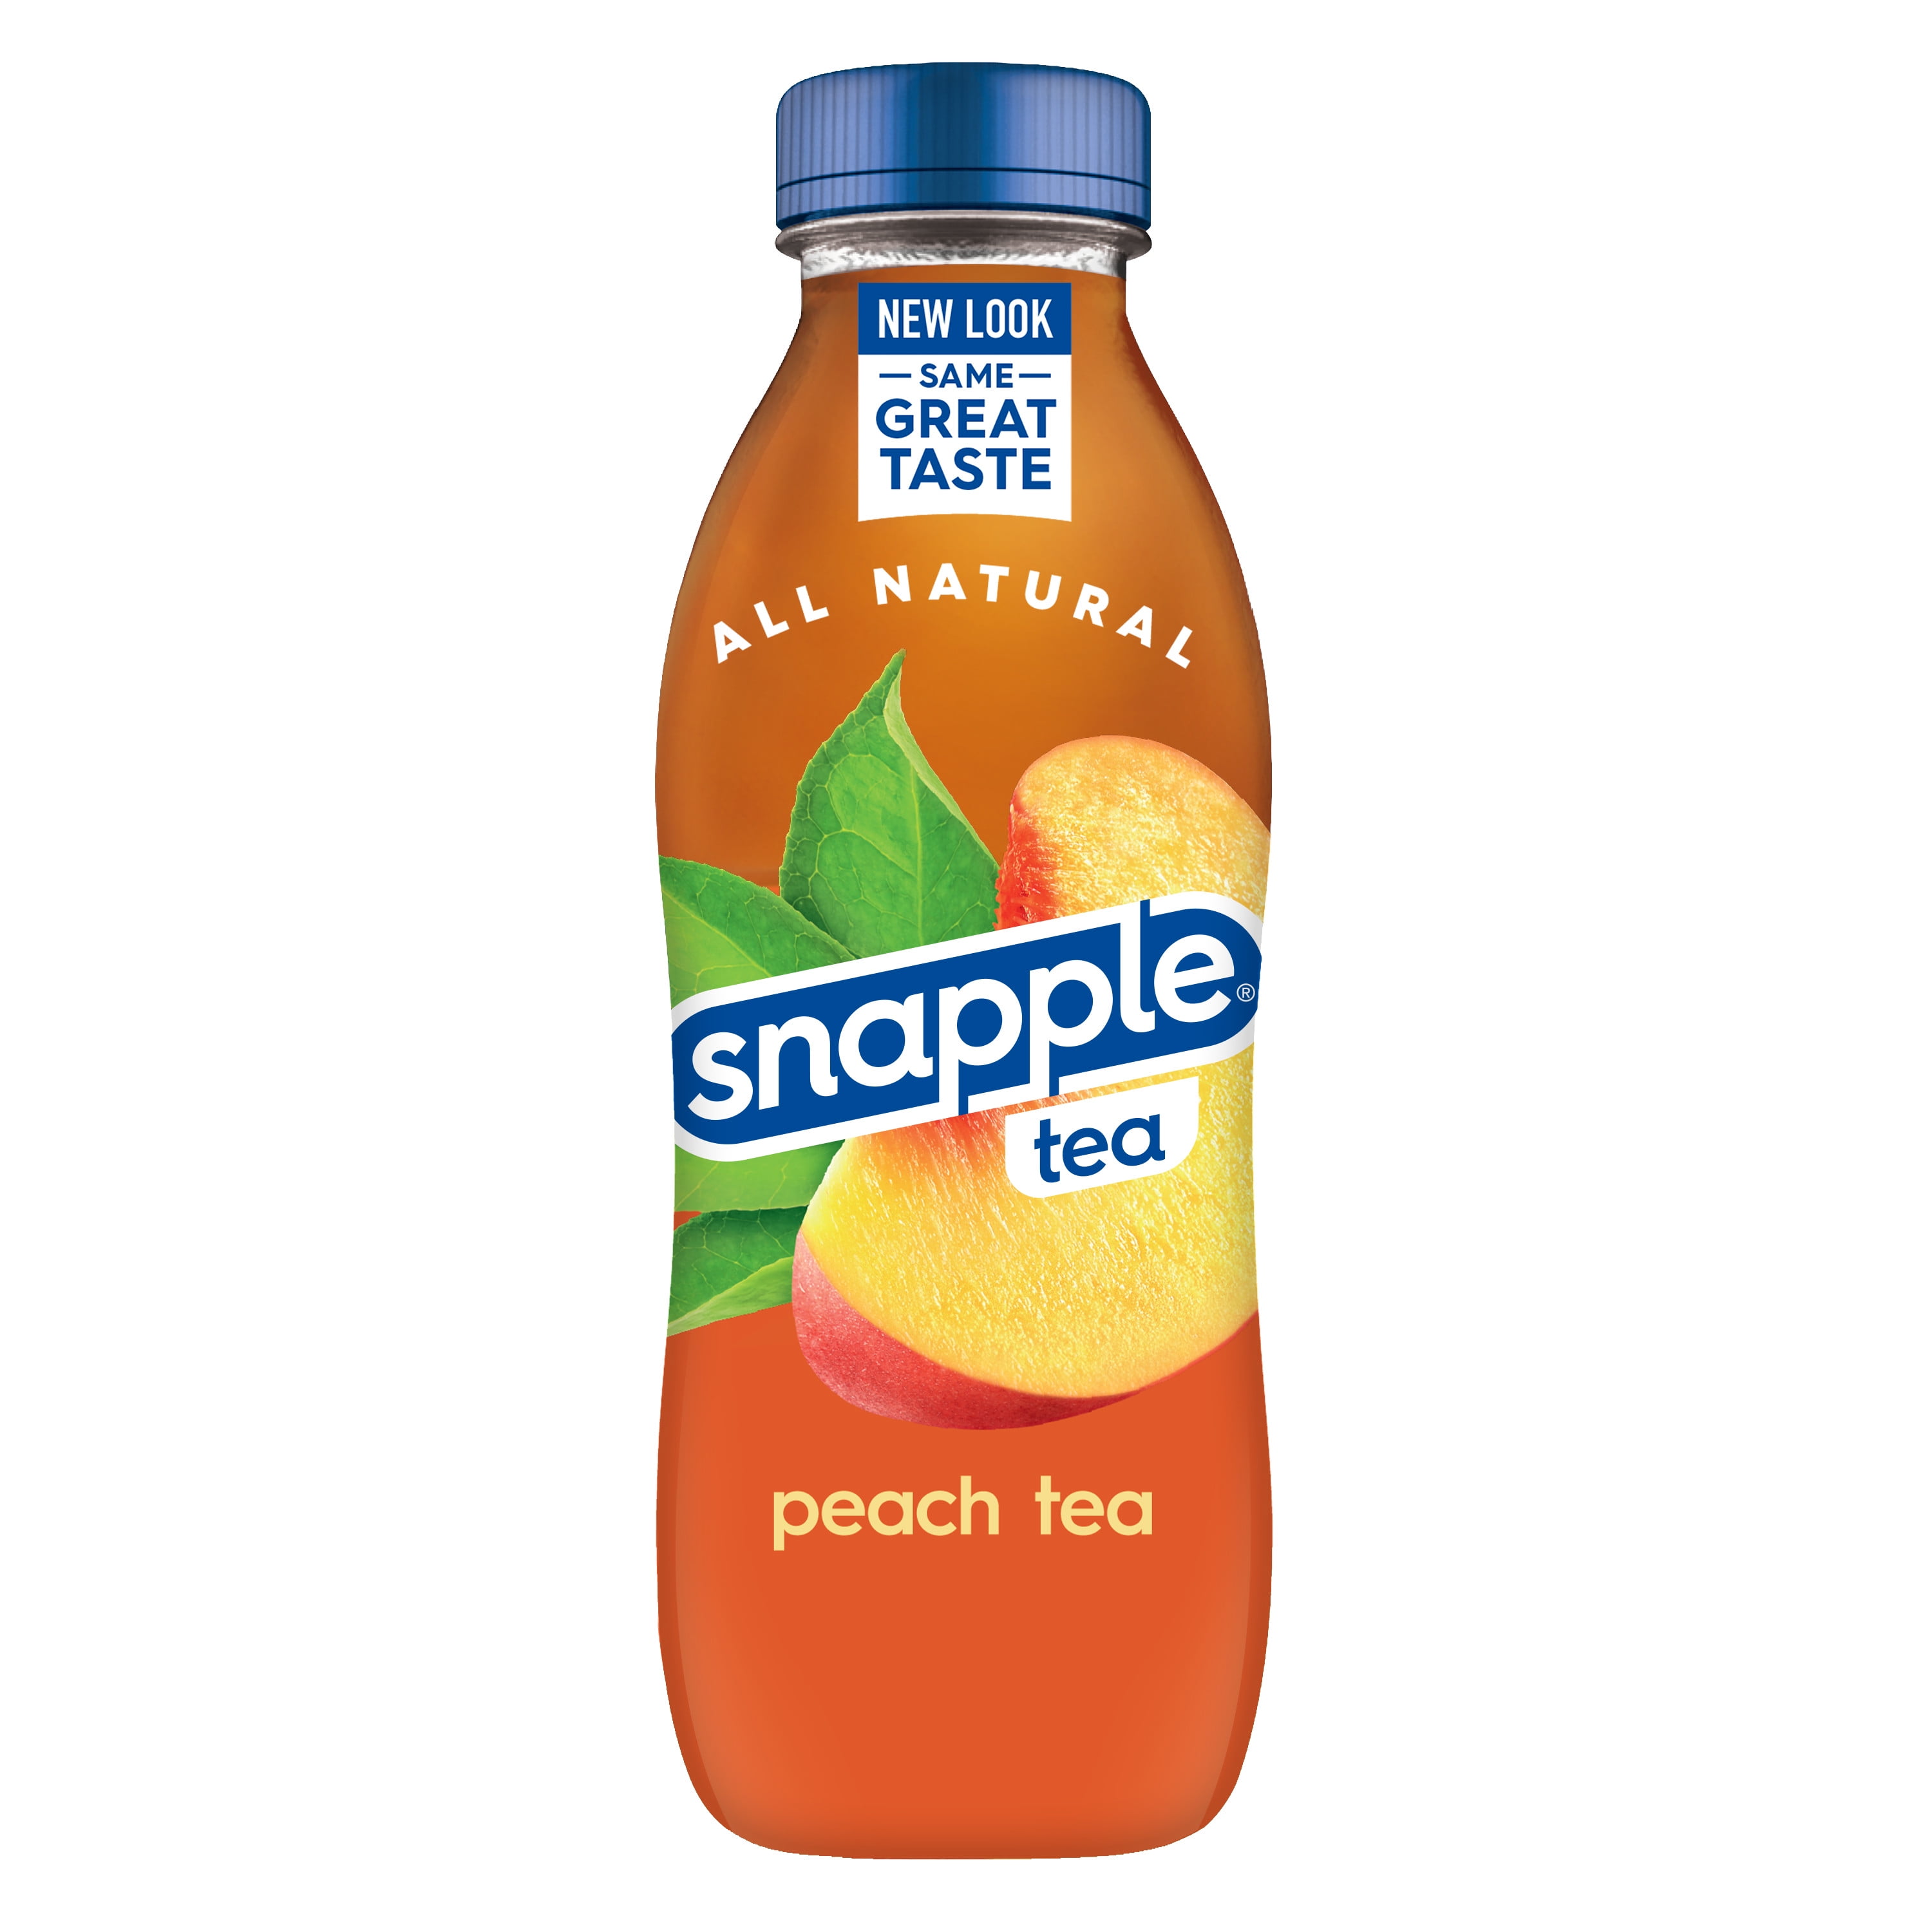 Diet Snapple Peach Tea 16 oz Bottles (Pack Of 6) for sale online